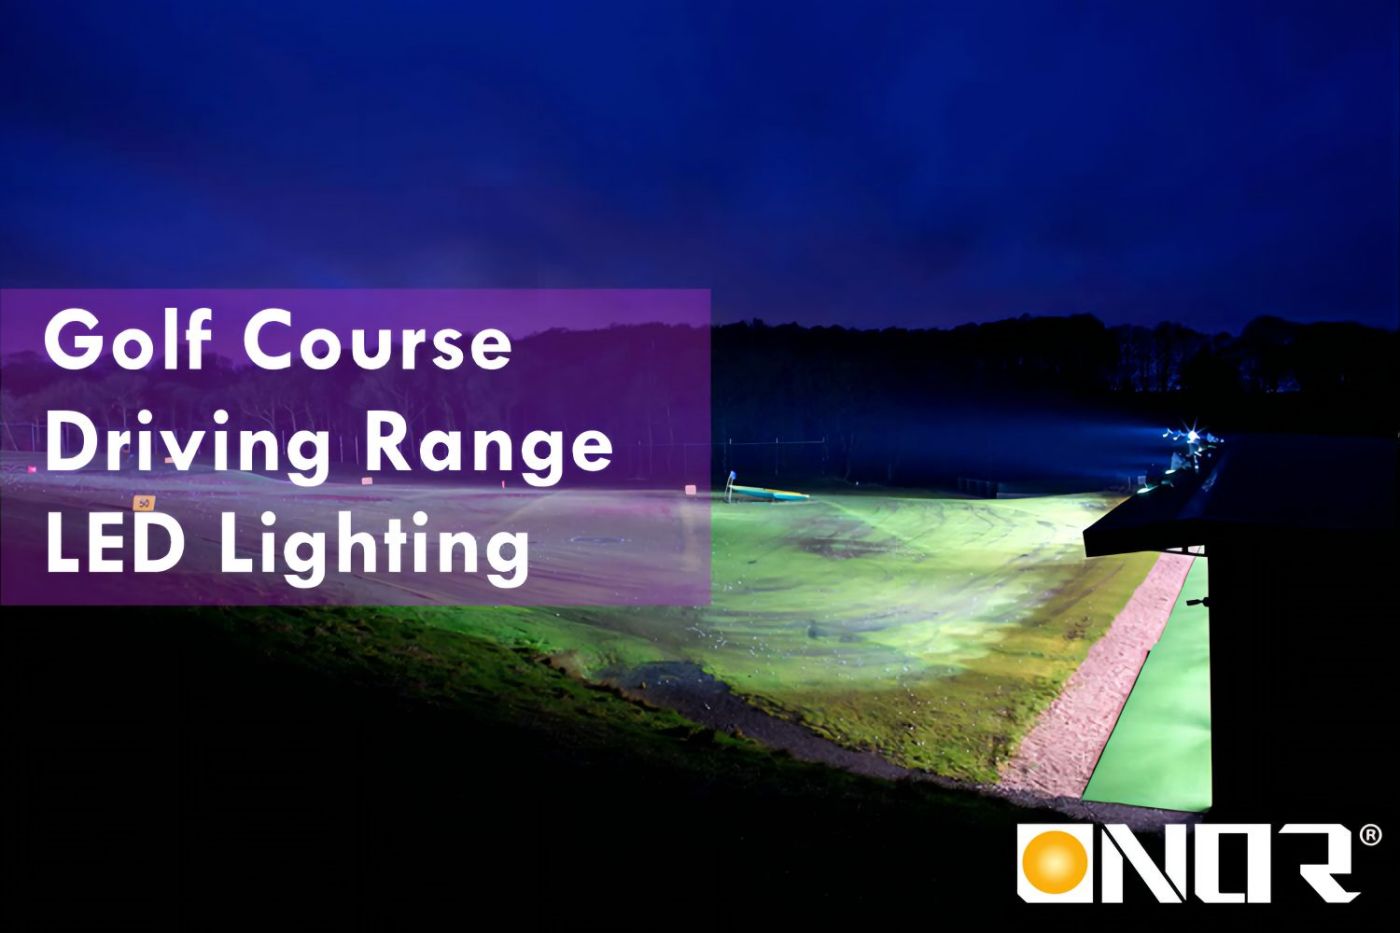 LED Golf Couse Lighting Guide 2